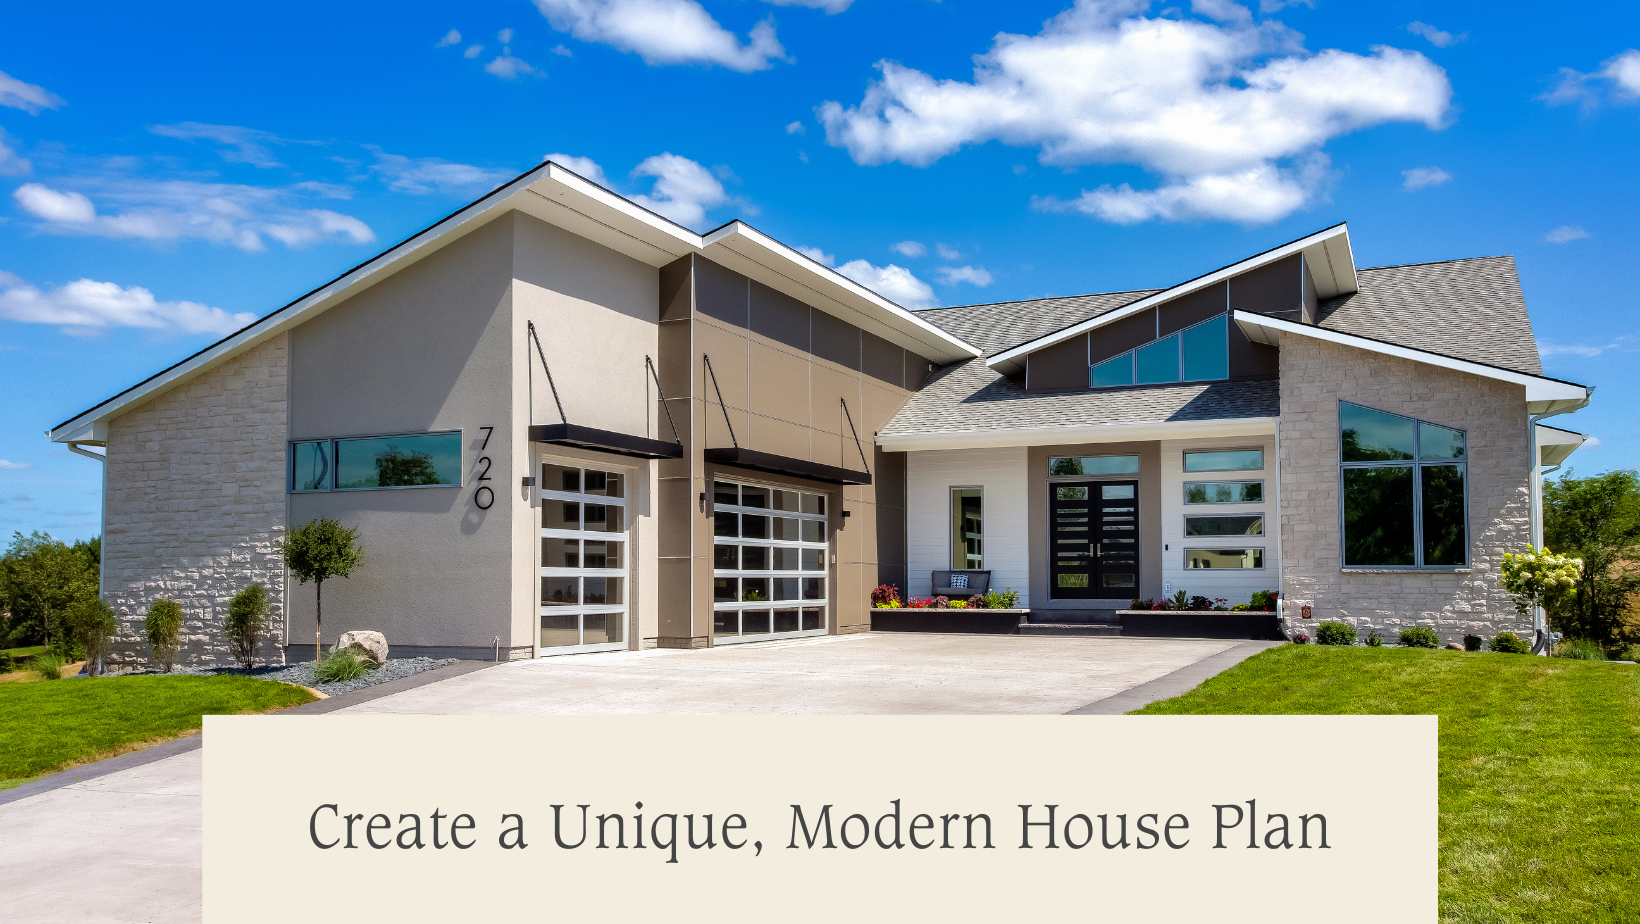 Create a Unique, Modern House Plan